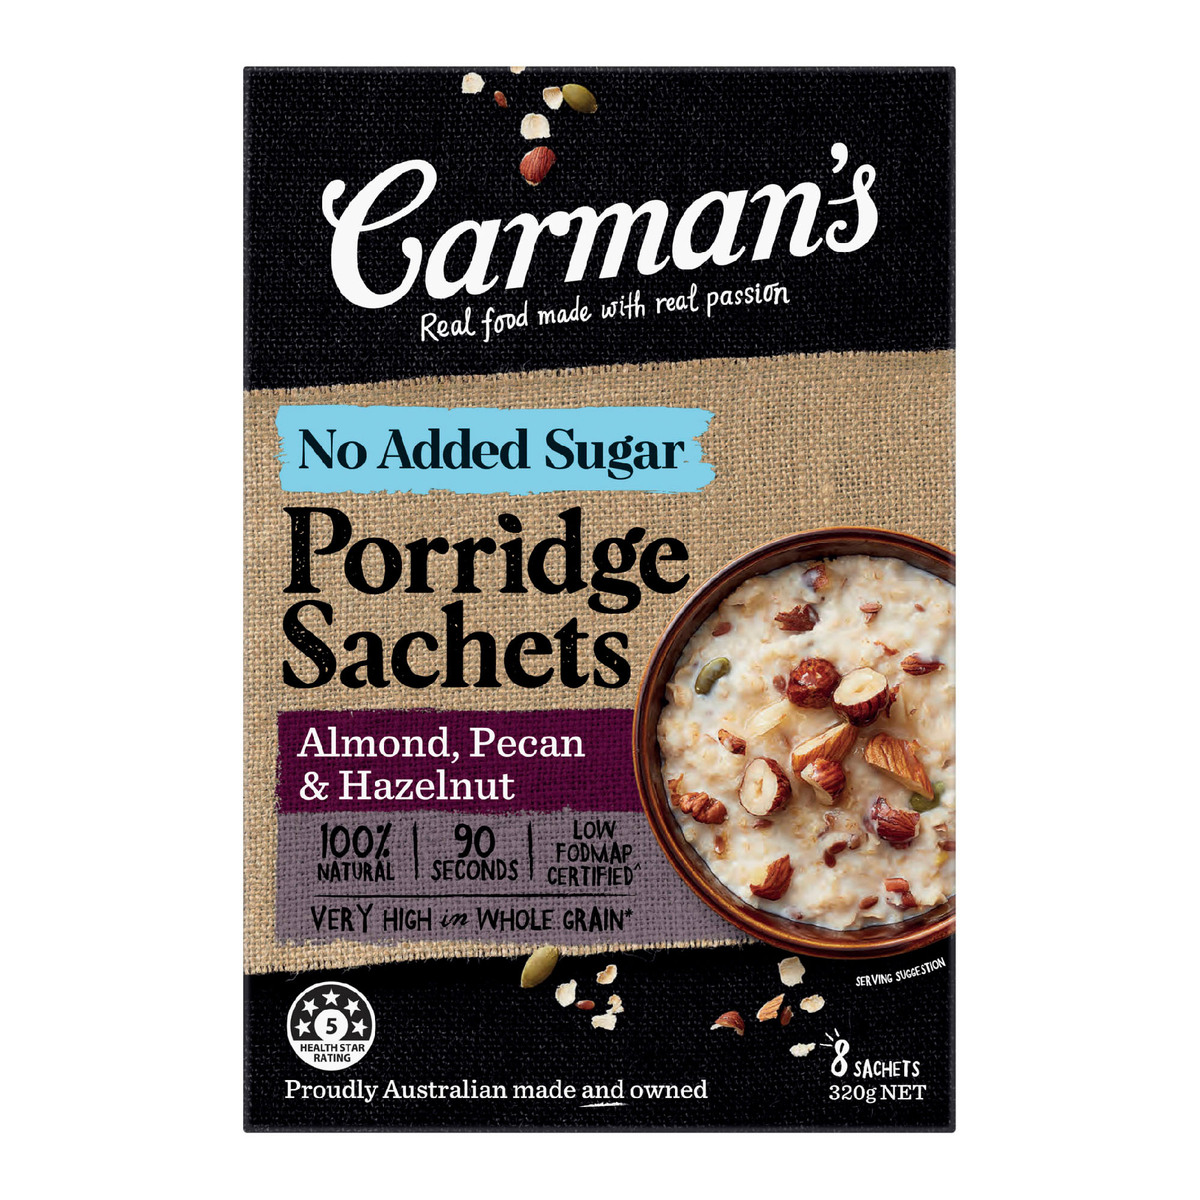 Carman's Porridge Sachets Almond Pecan & Hazelnut 320 g